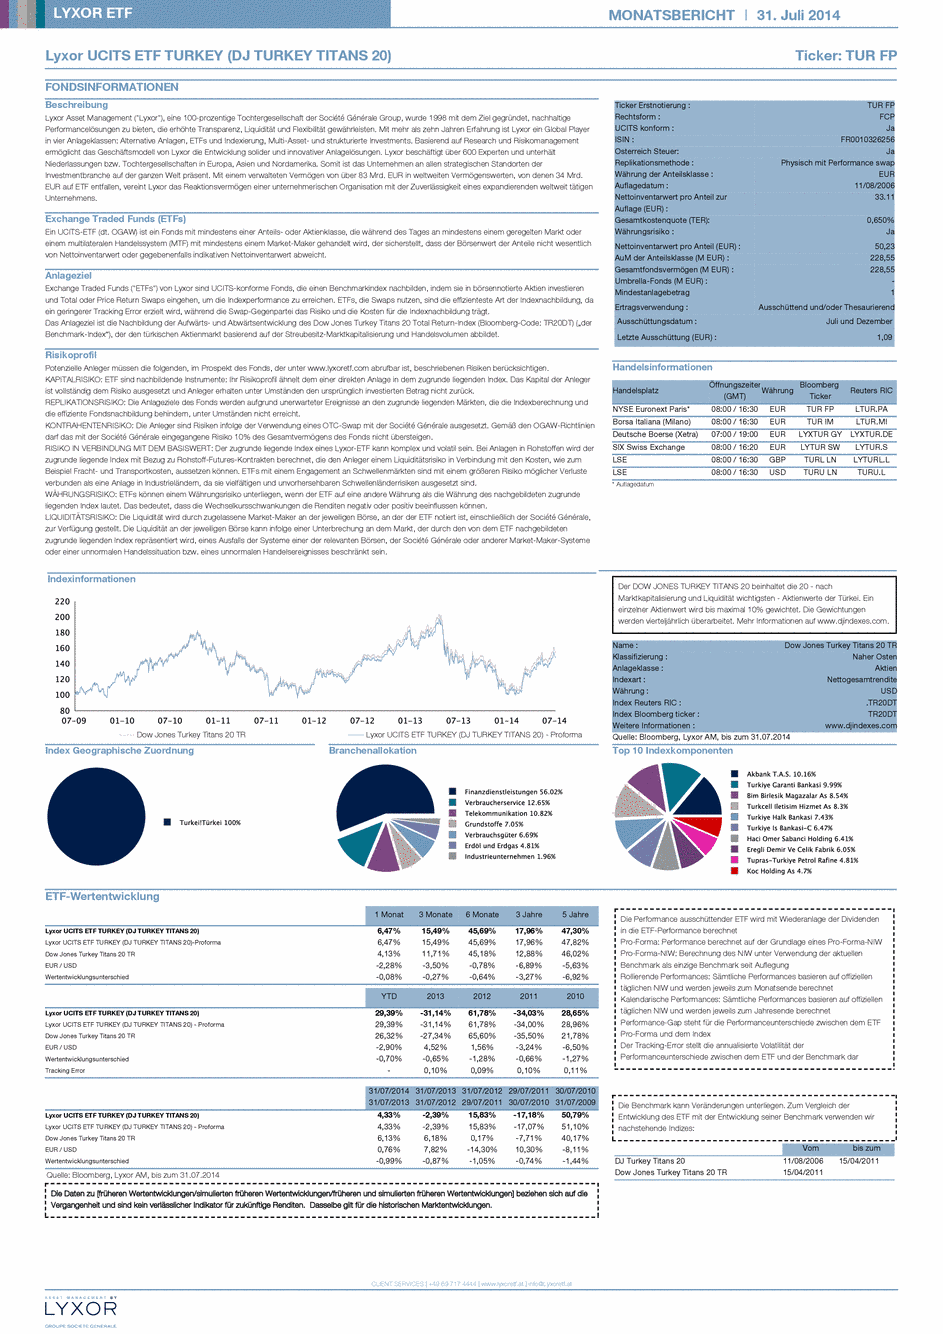 Reporting LYXOR MSCI TURKEY UCITS ETF - 31/07/2014 - German